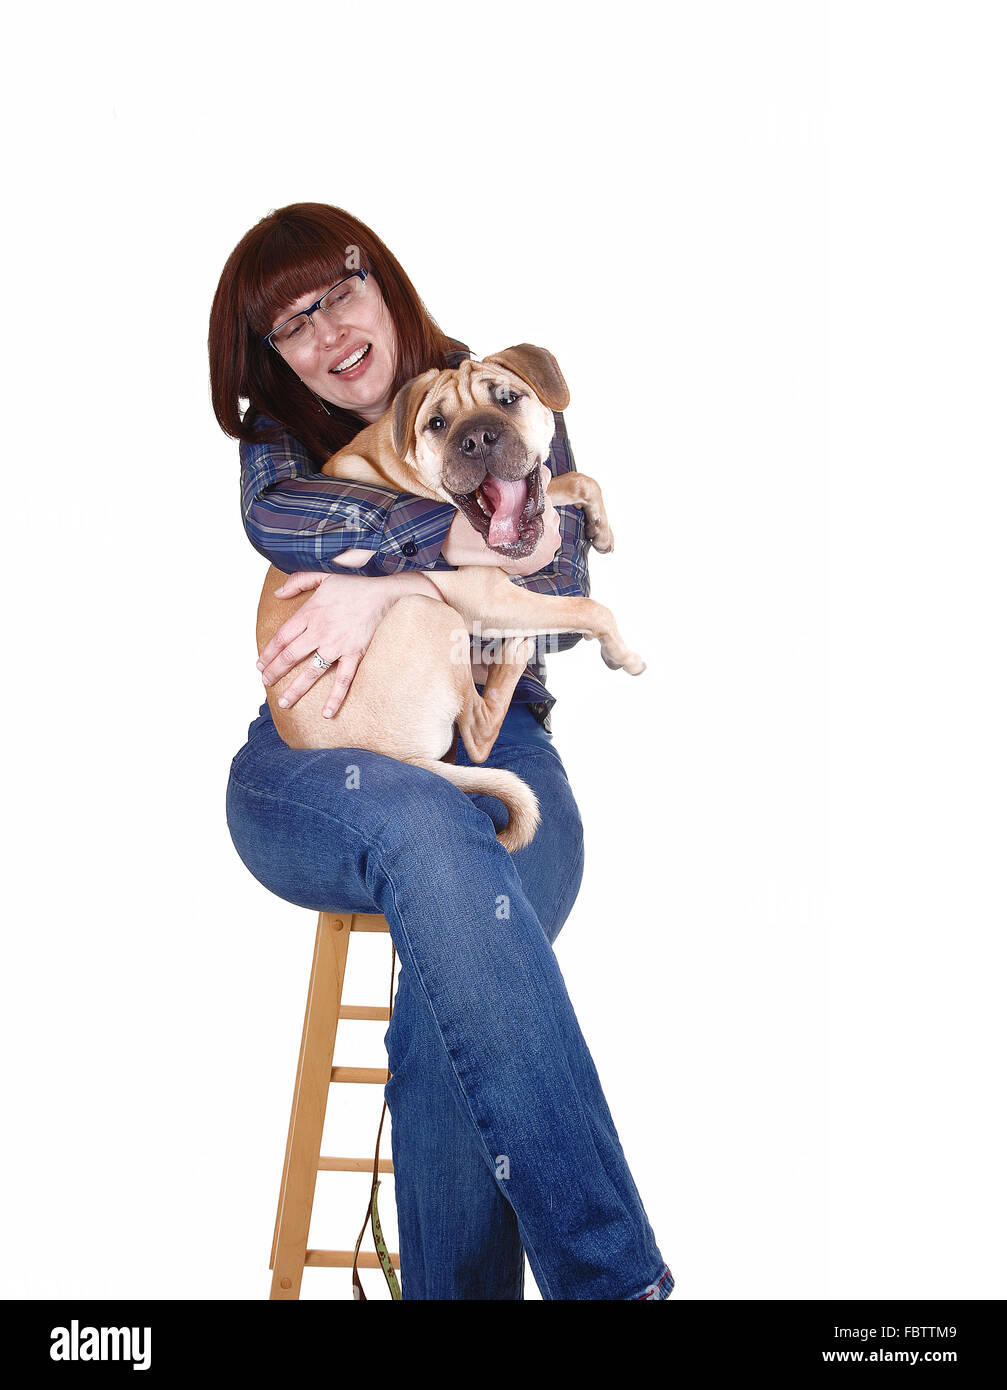 Woman holding dog. Stock Photo